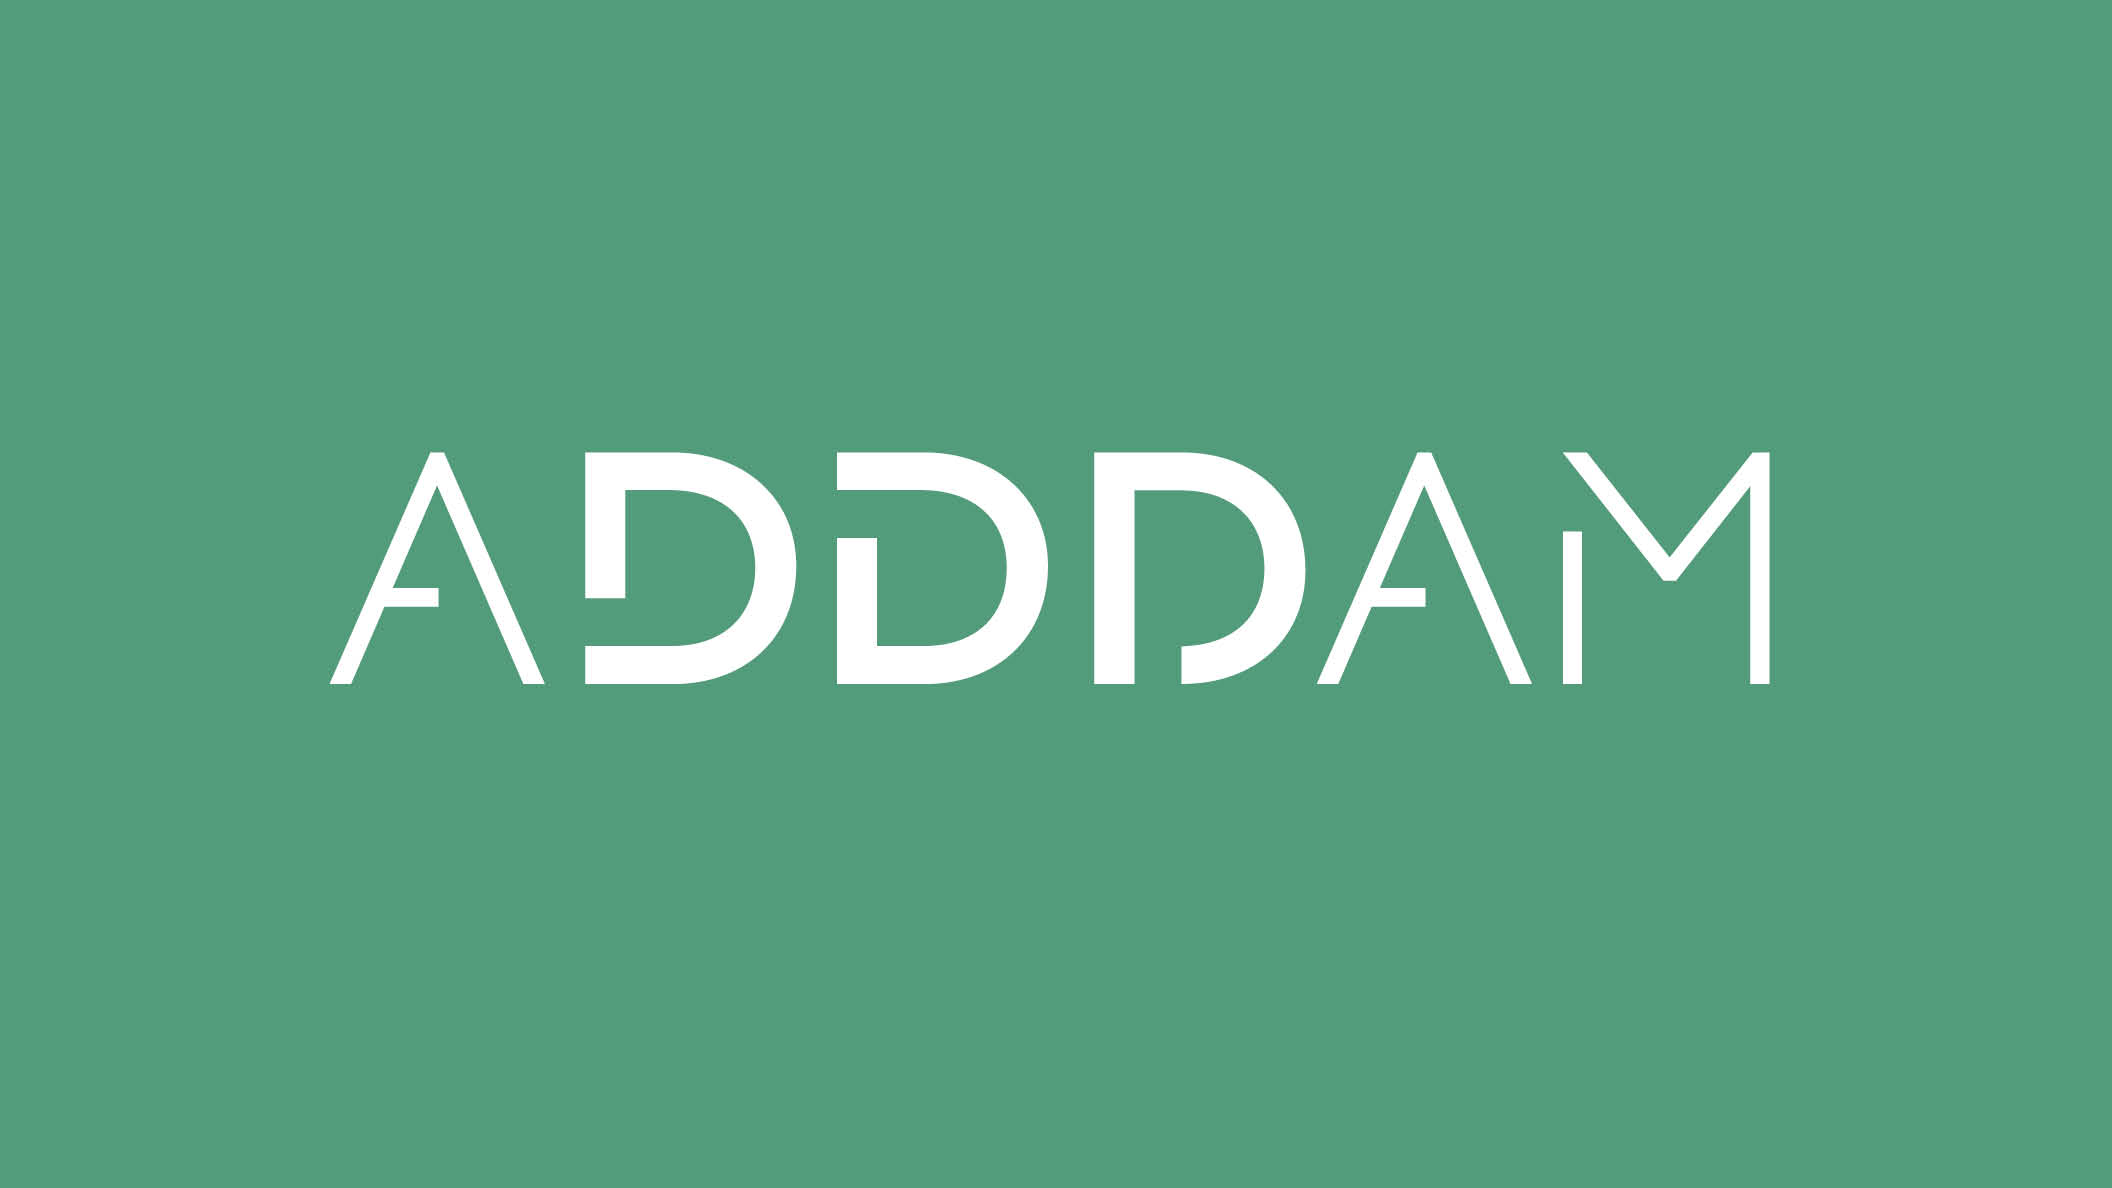 ADDDAM Corporate Design Logo